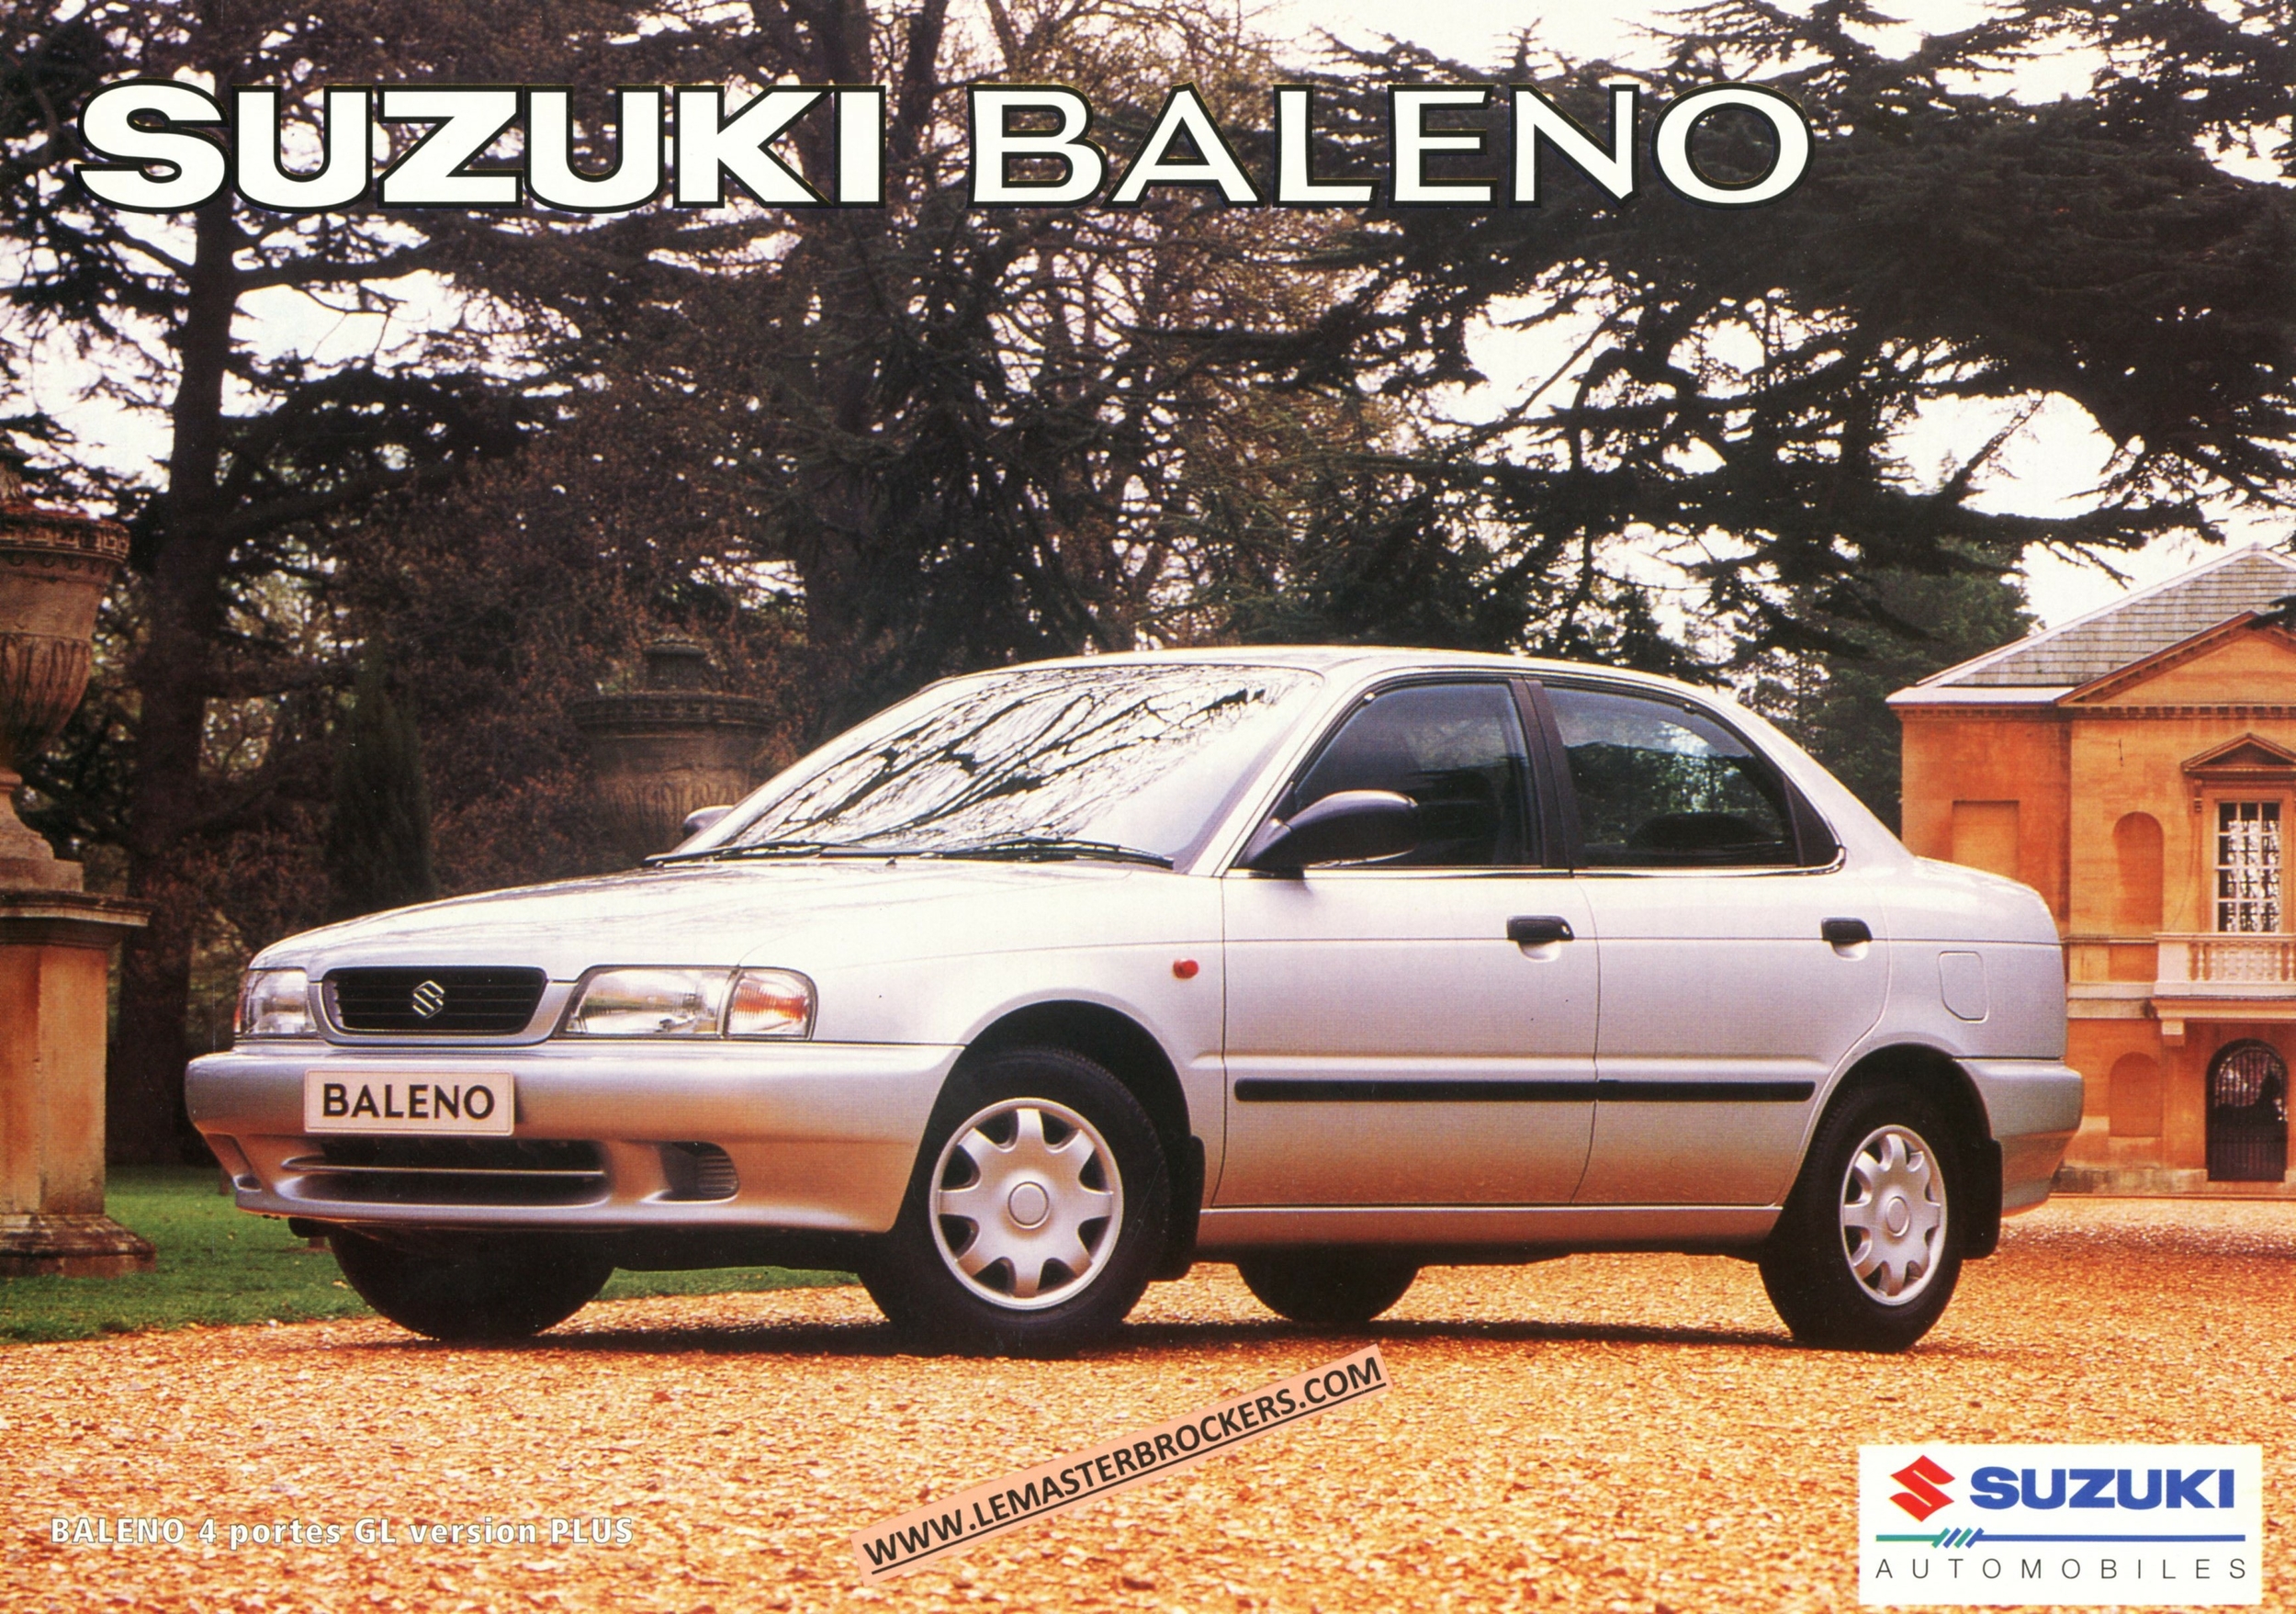 SUZUKI BALENO GAMME 1996 - 3 et 4 portes - BROCHURE AUTO 1996